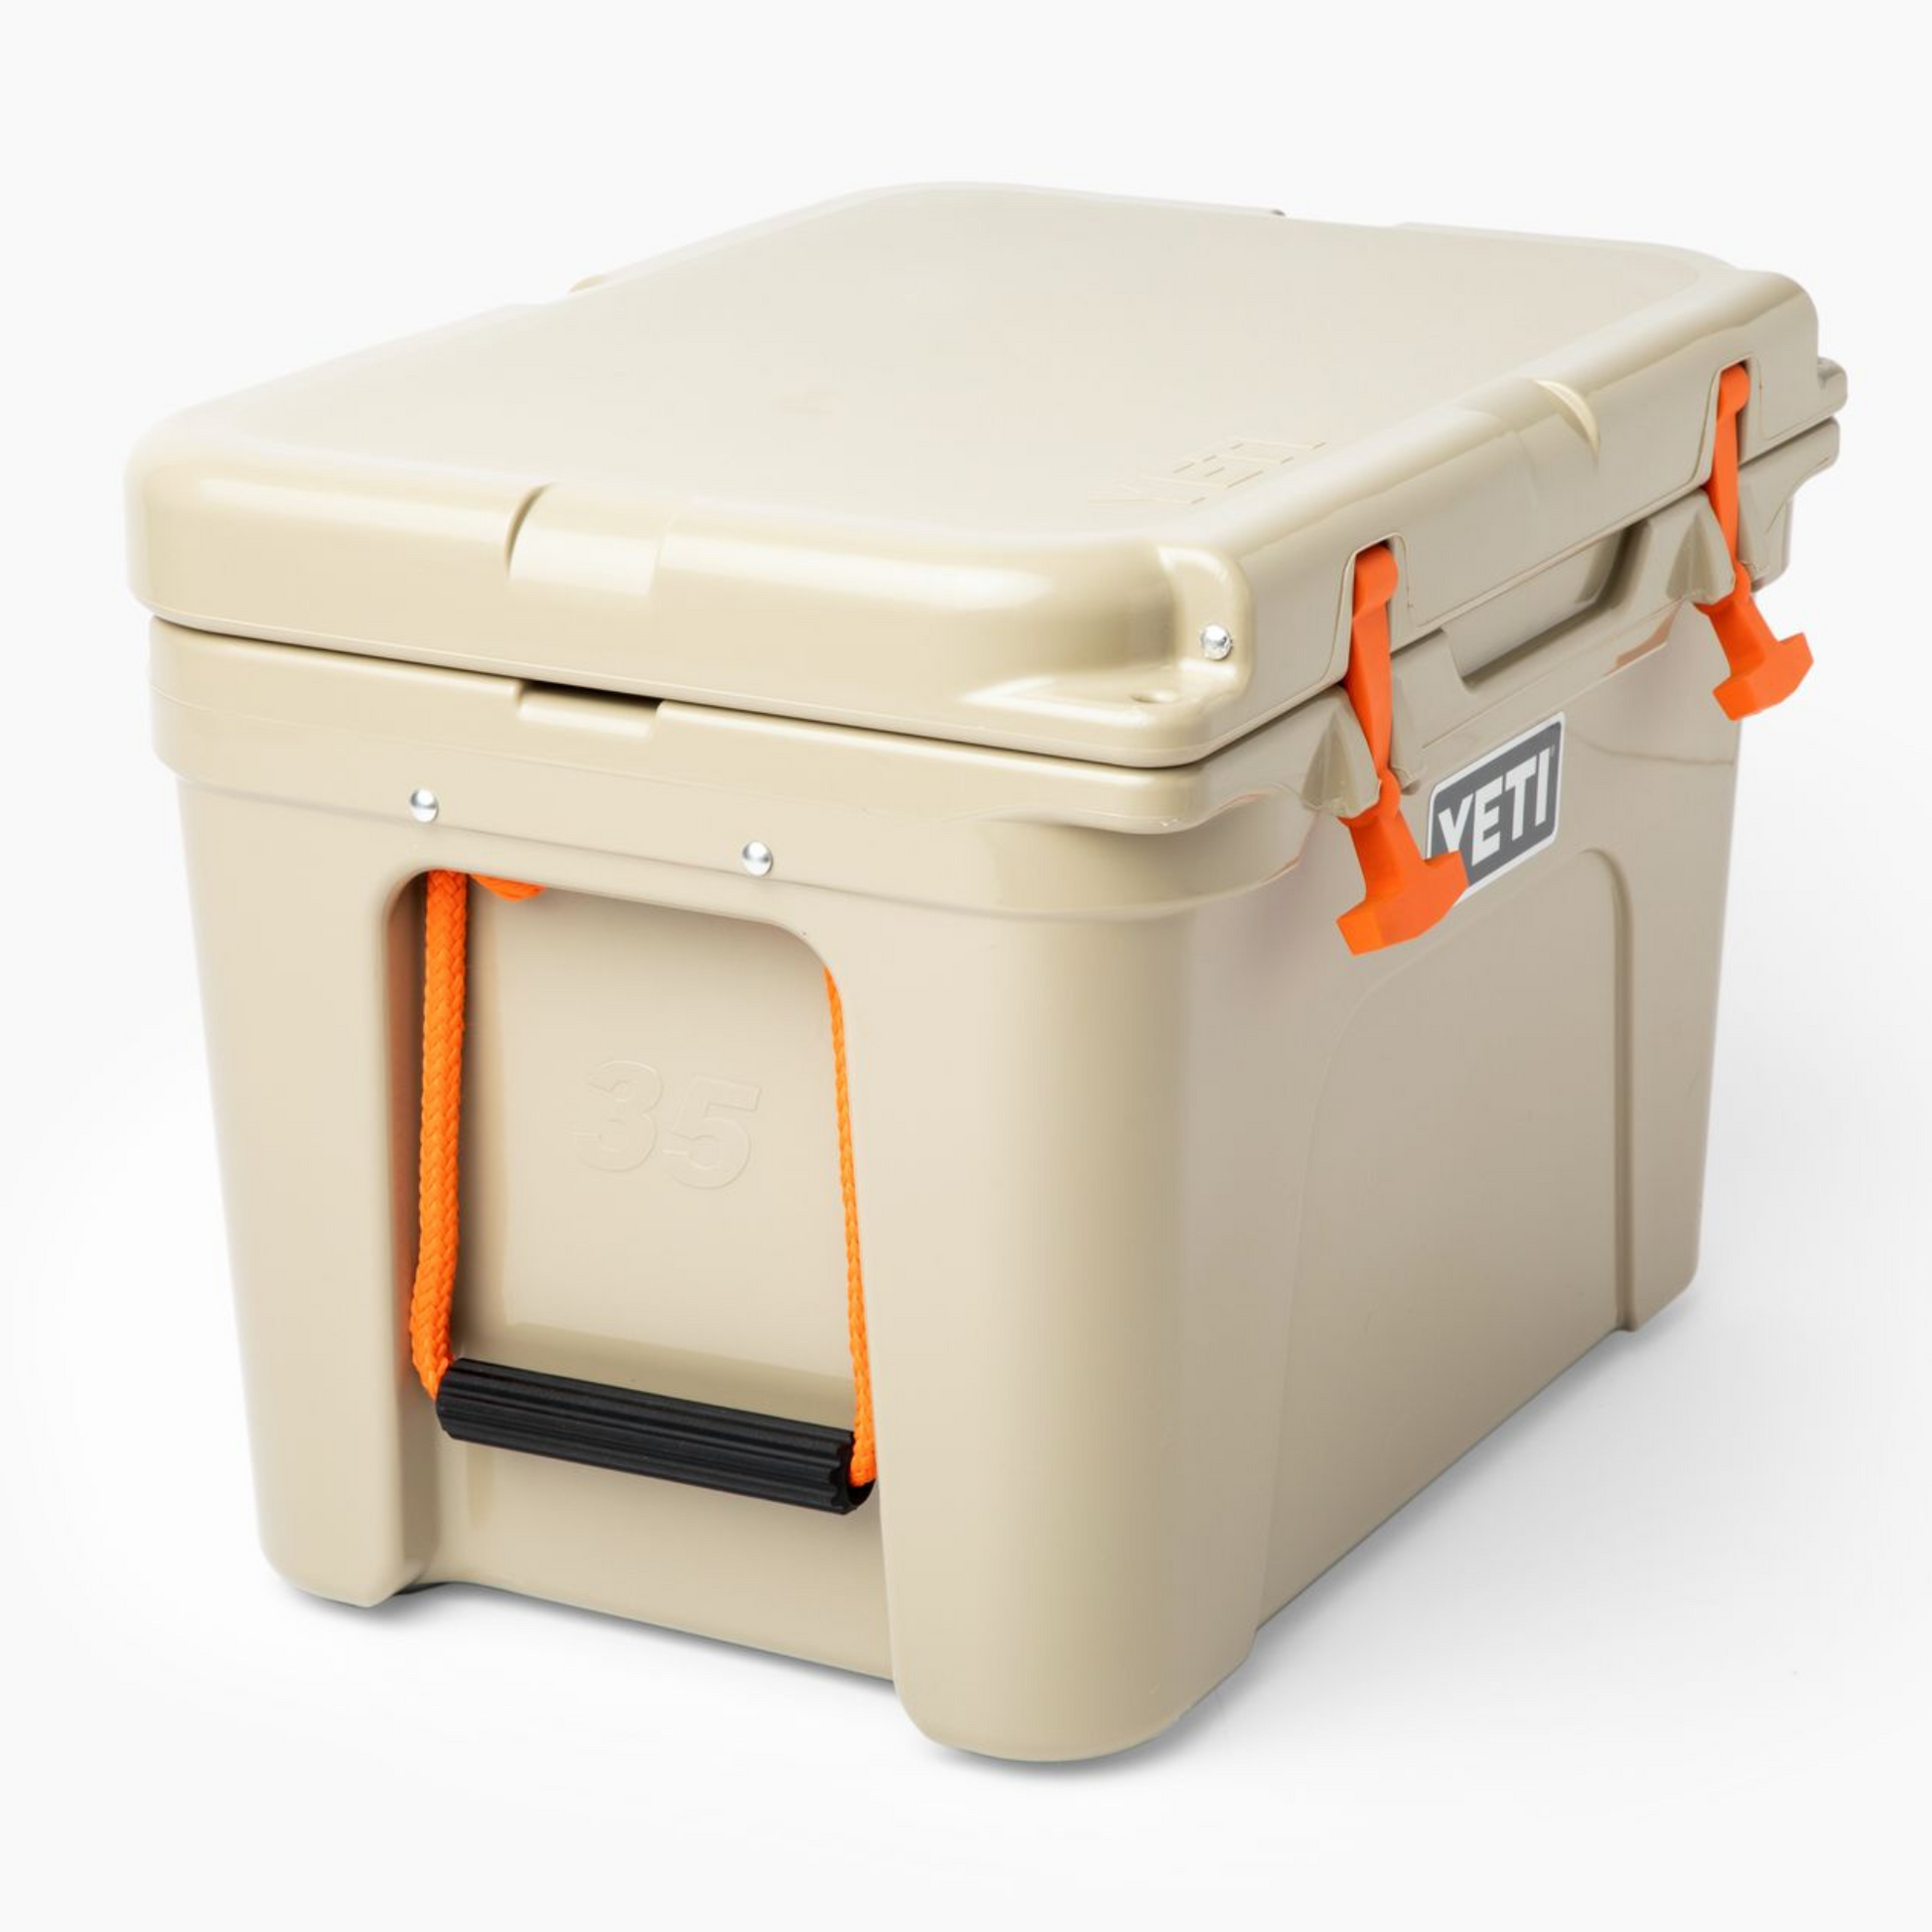 blaze orange latch kit for yeti coolers